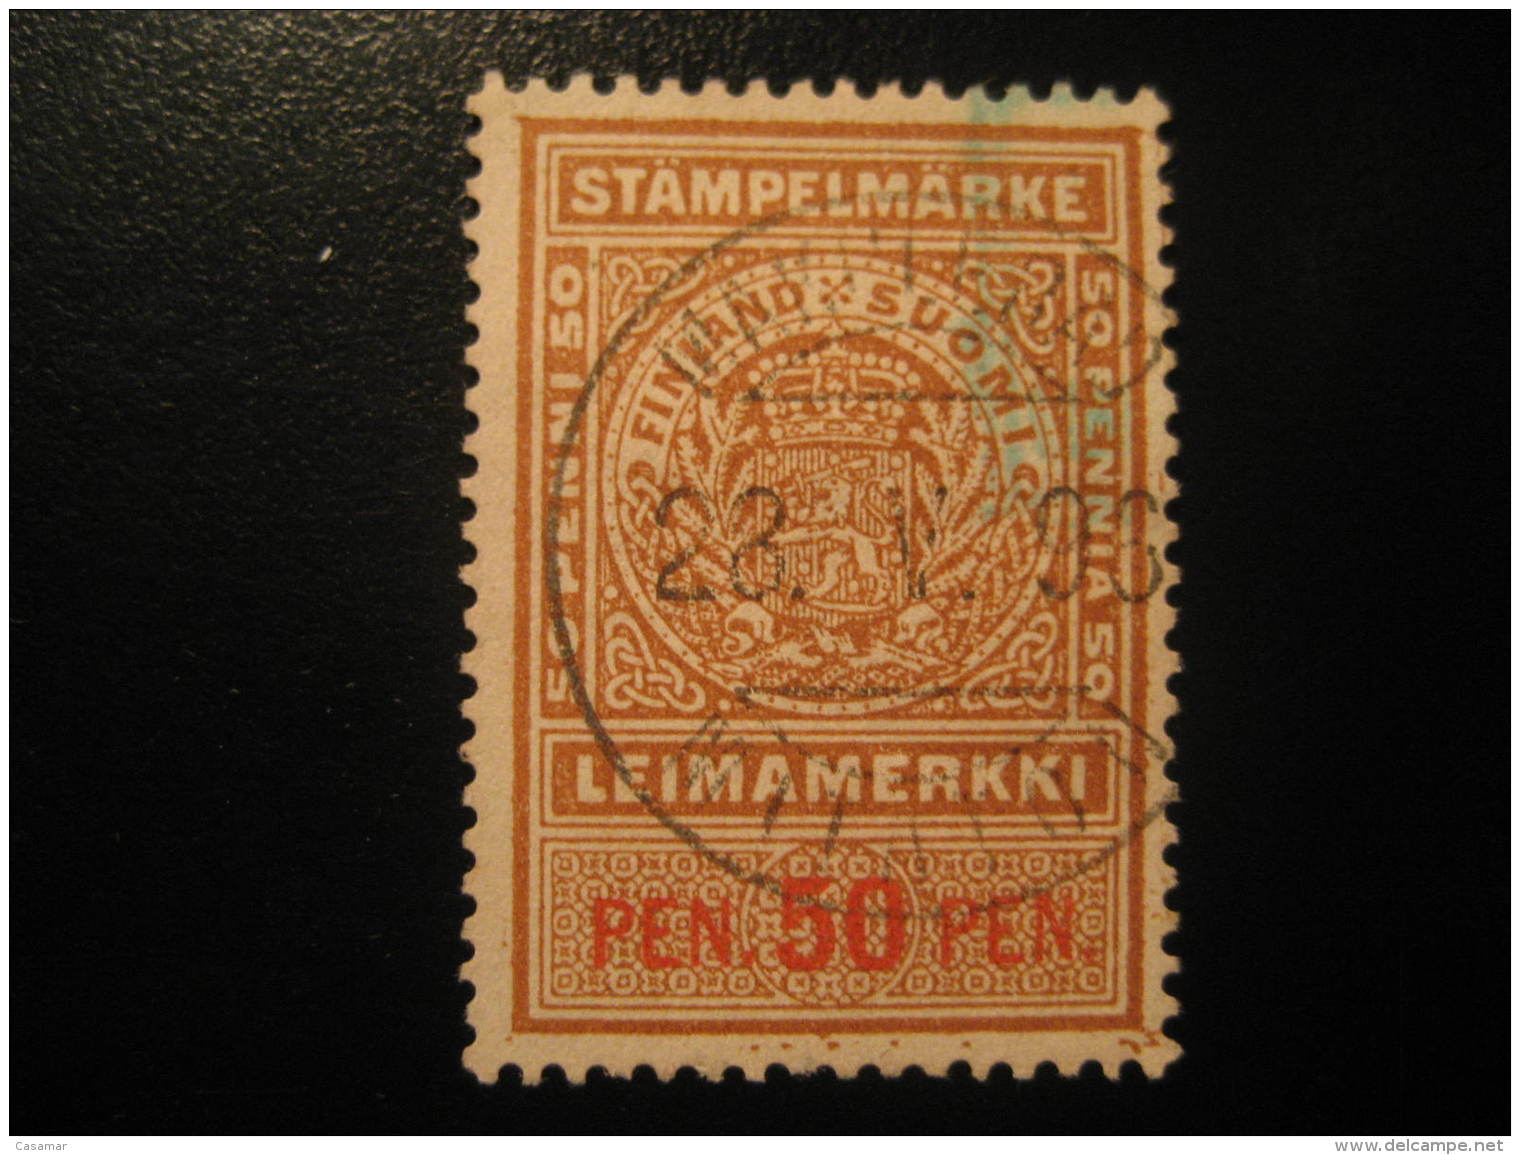 1896 STAMPELMARKE 50 Pen Revenue Fiscal Tax Postage Due Official FINLAND - Steuermarken